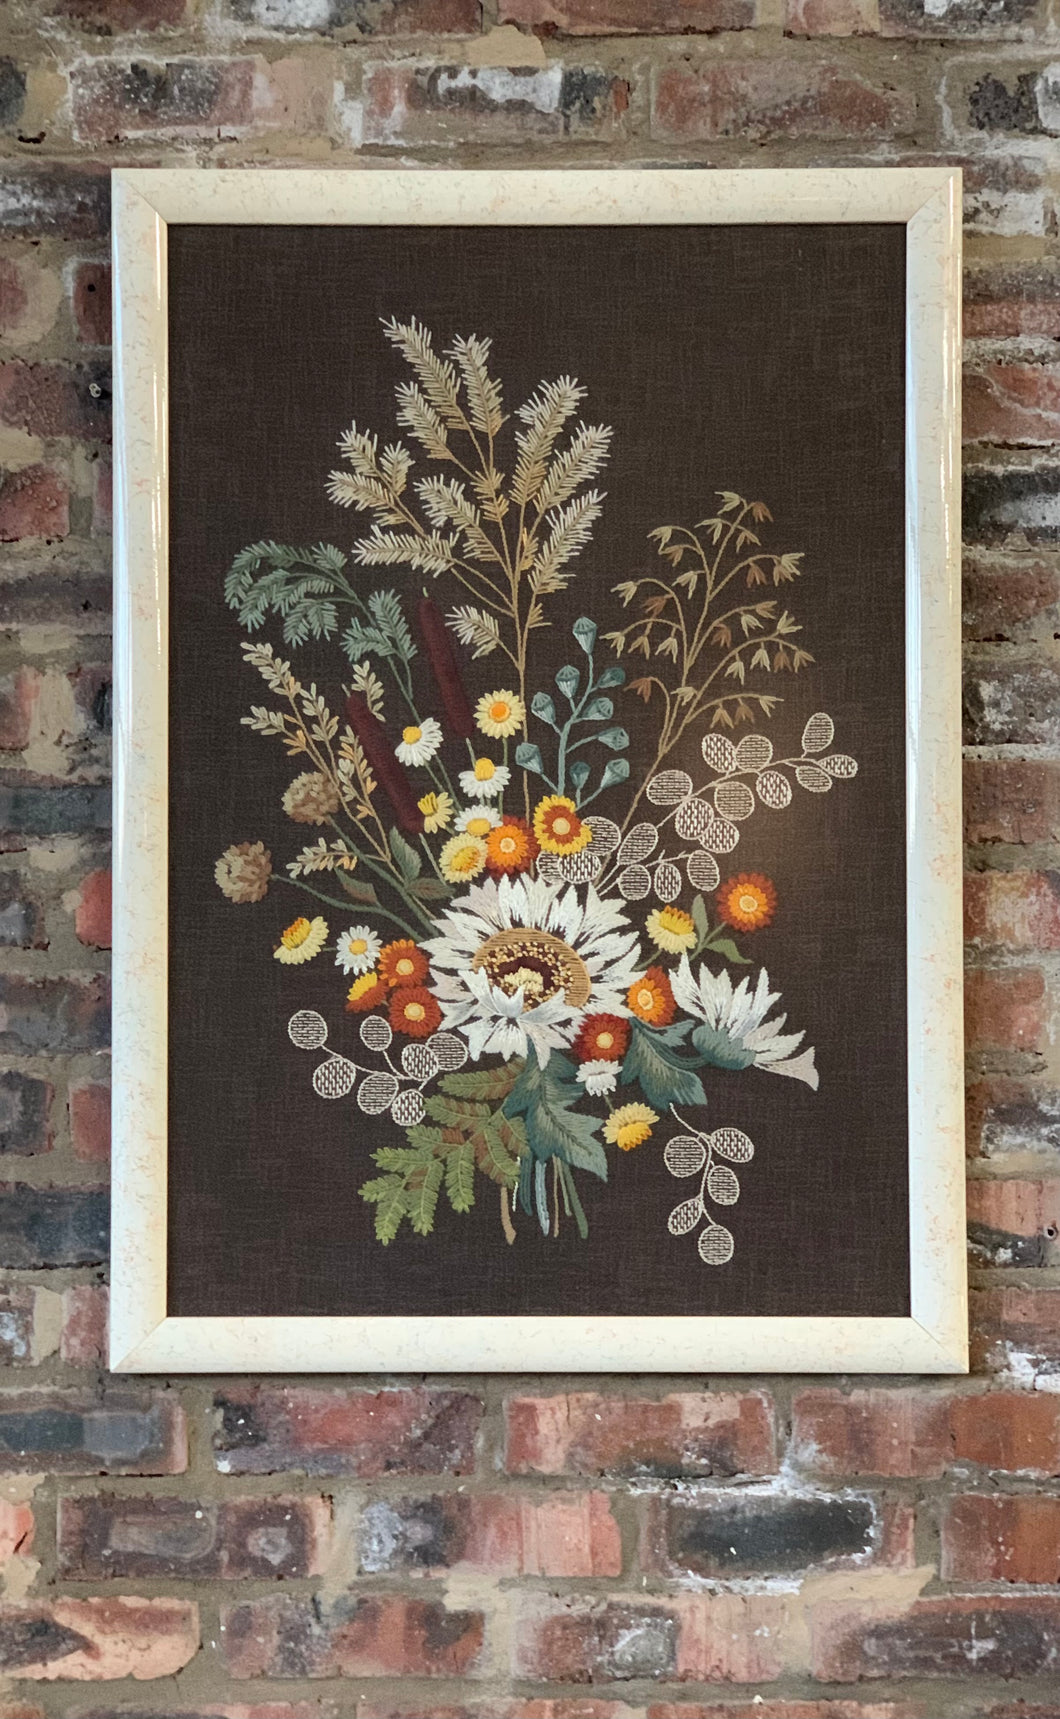 Retro Framed Embroidered Tapestry